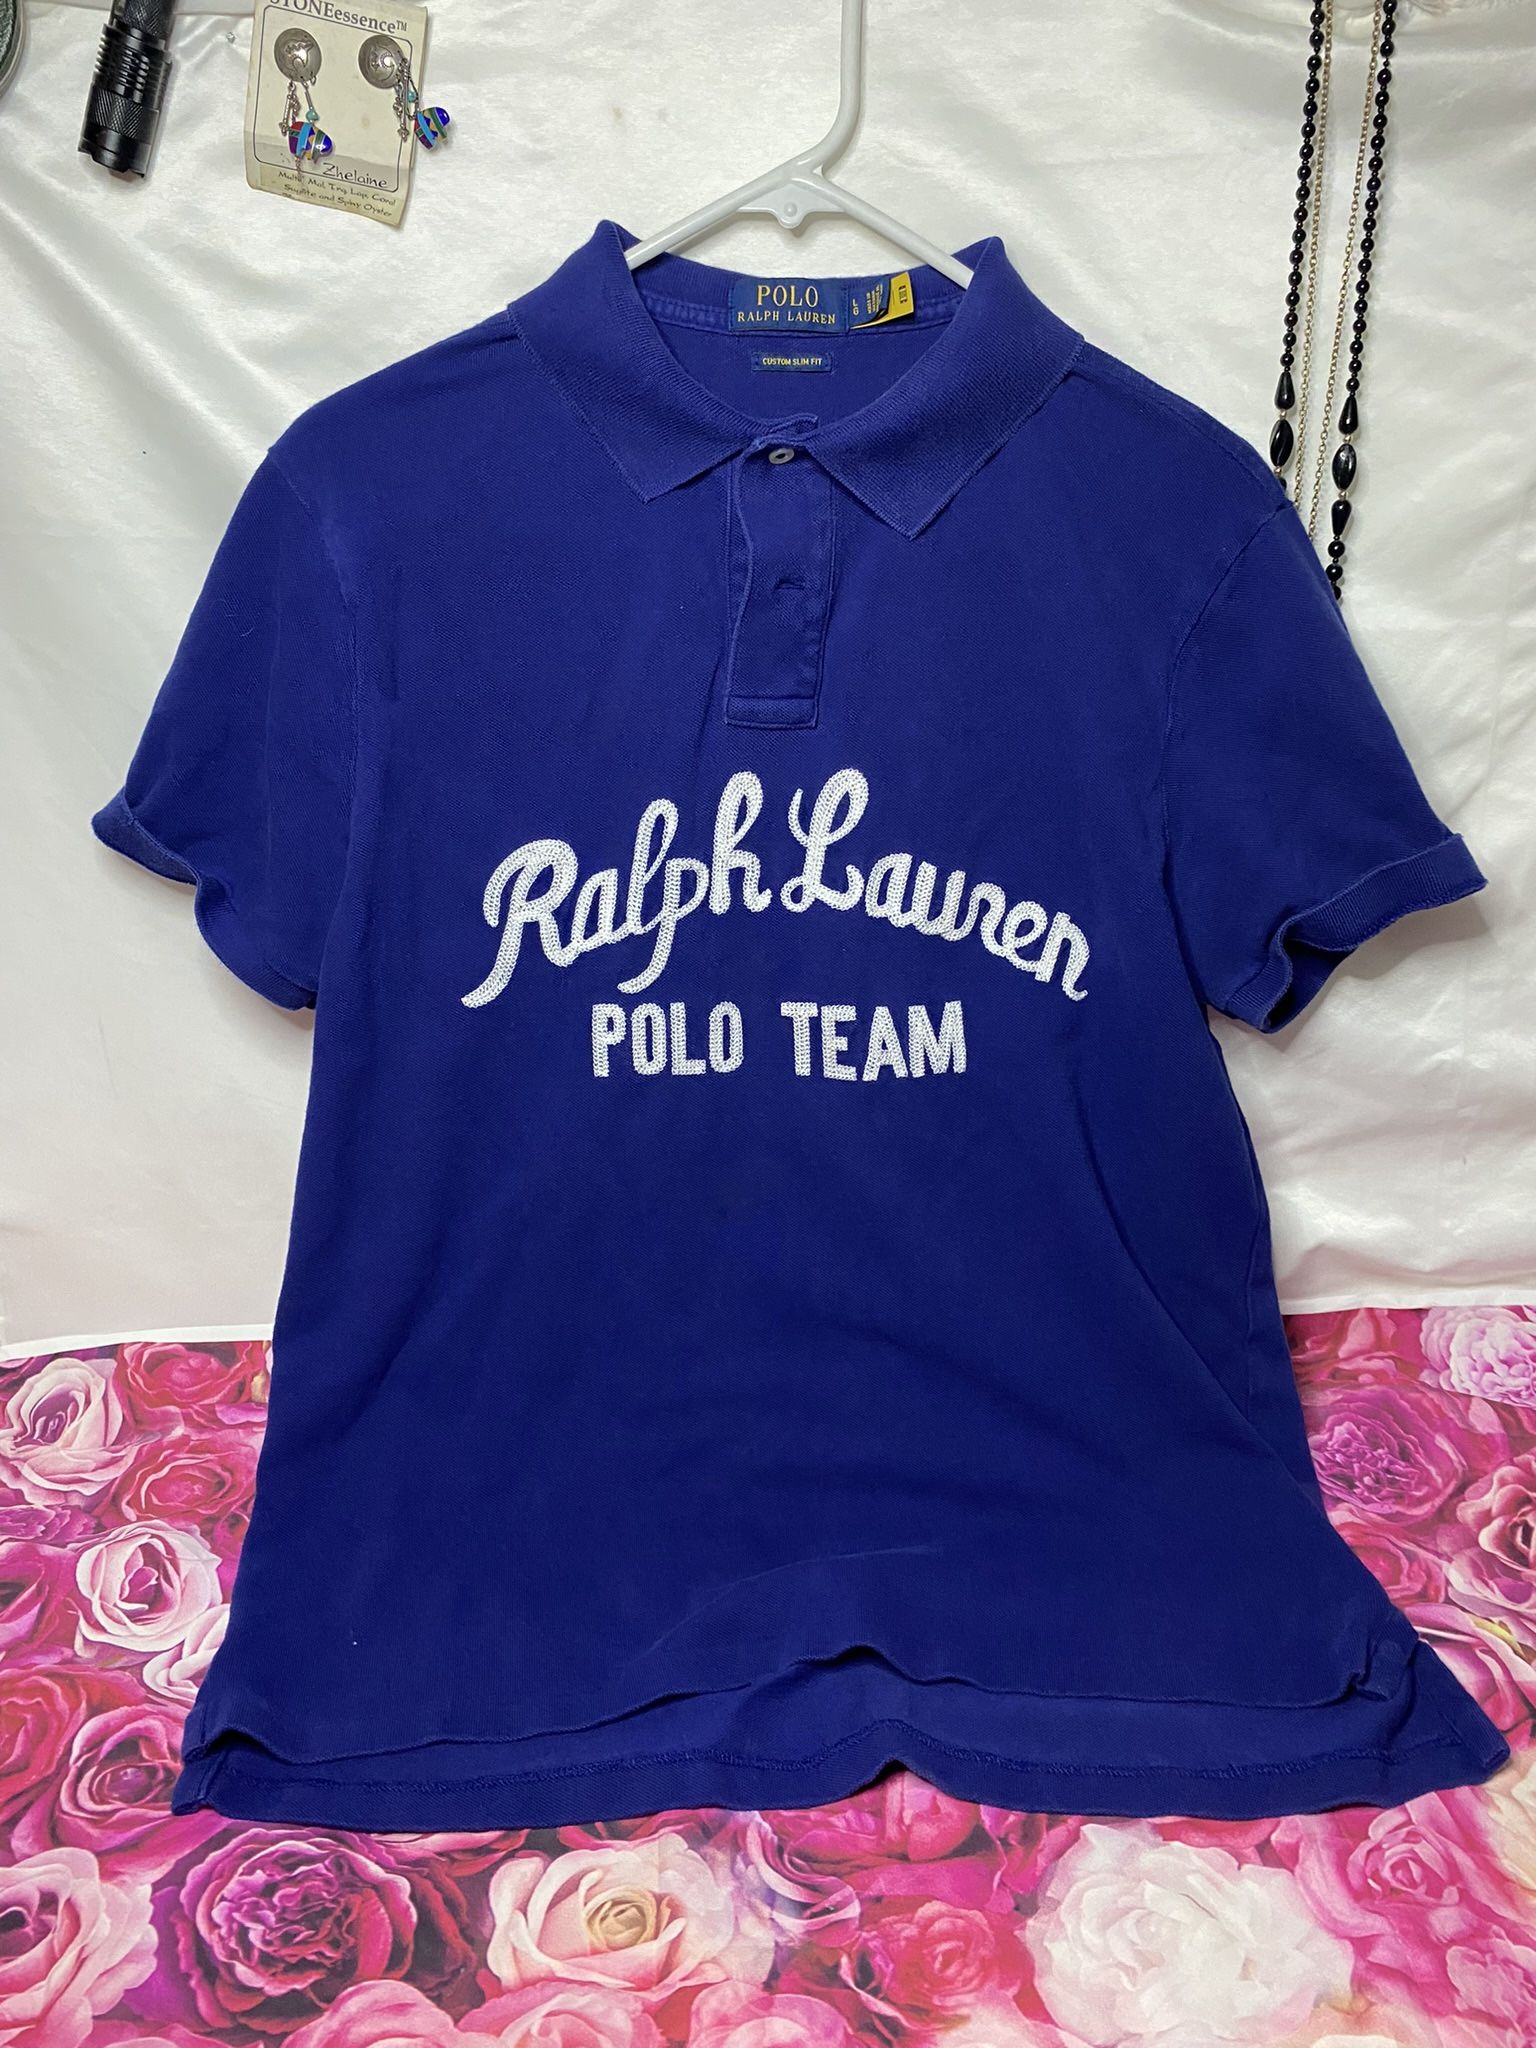 Men’s Large Polo Ralph Lauren Shirt 